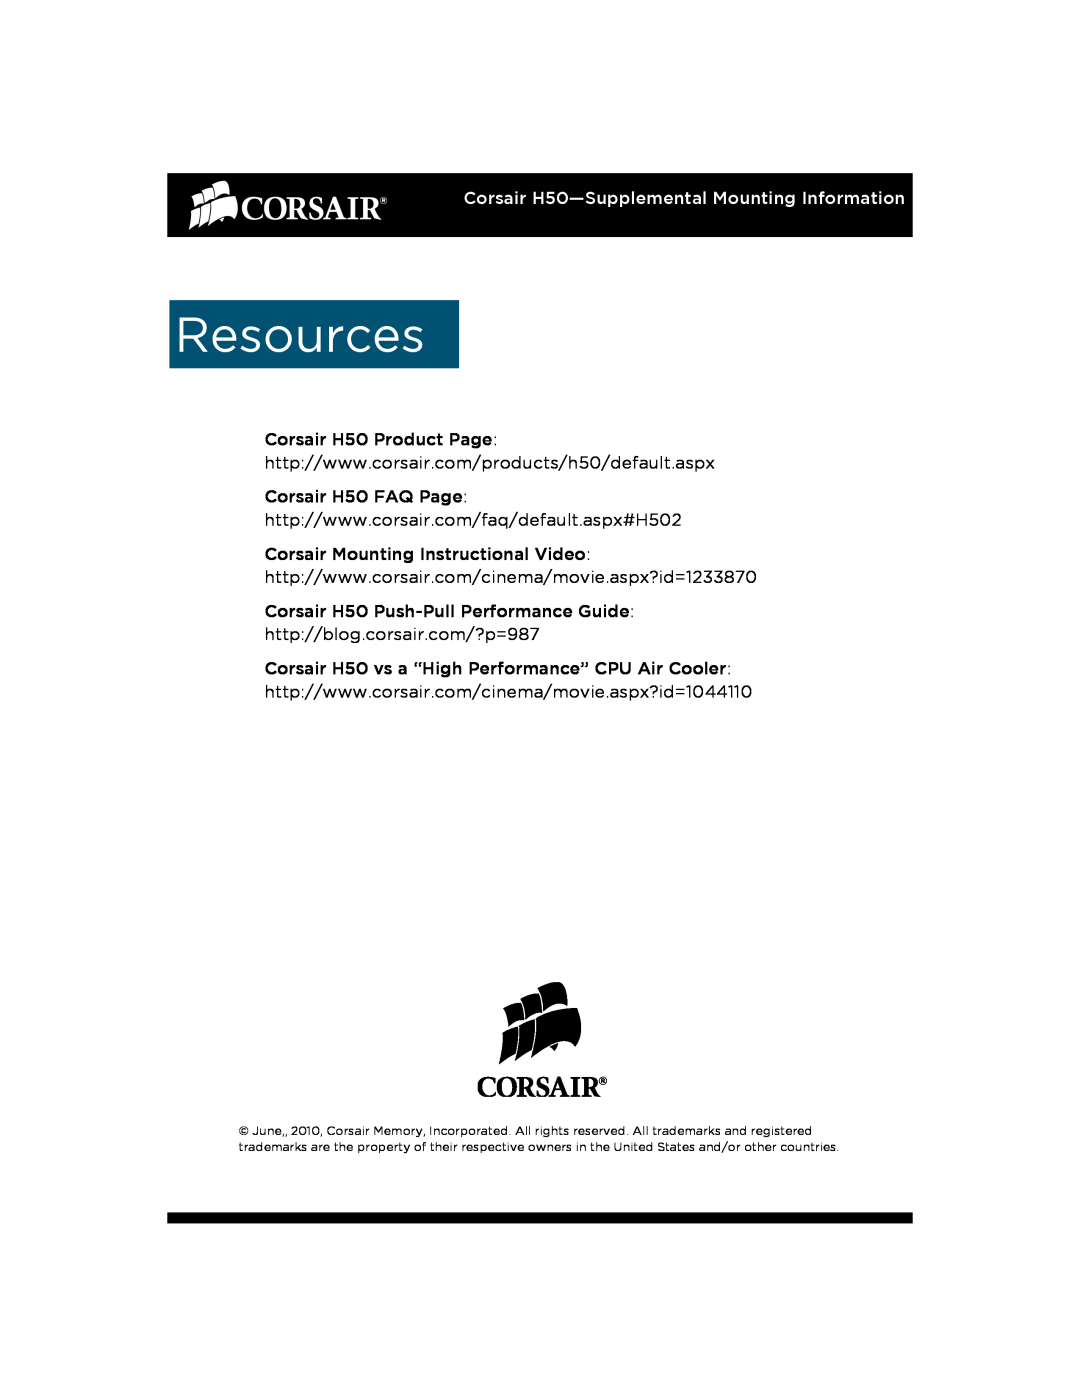 Corsair Marine Resources, Corsair H50-Supplemental Mounting Information, Corsair H50 Product Page, Corsair H50 FAQ Page 